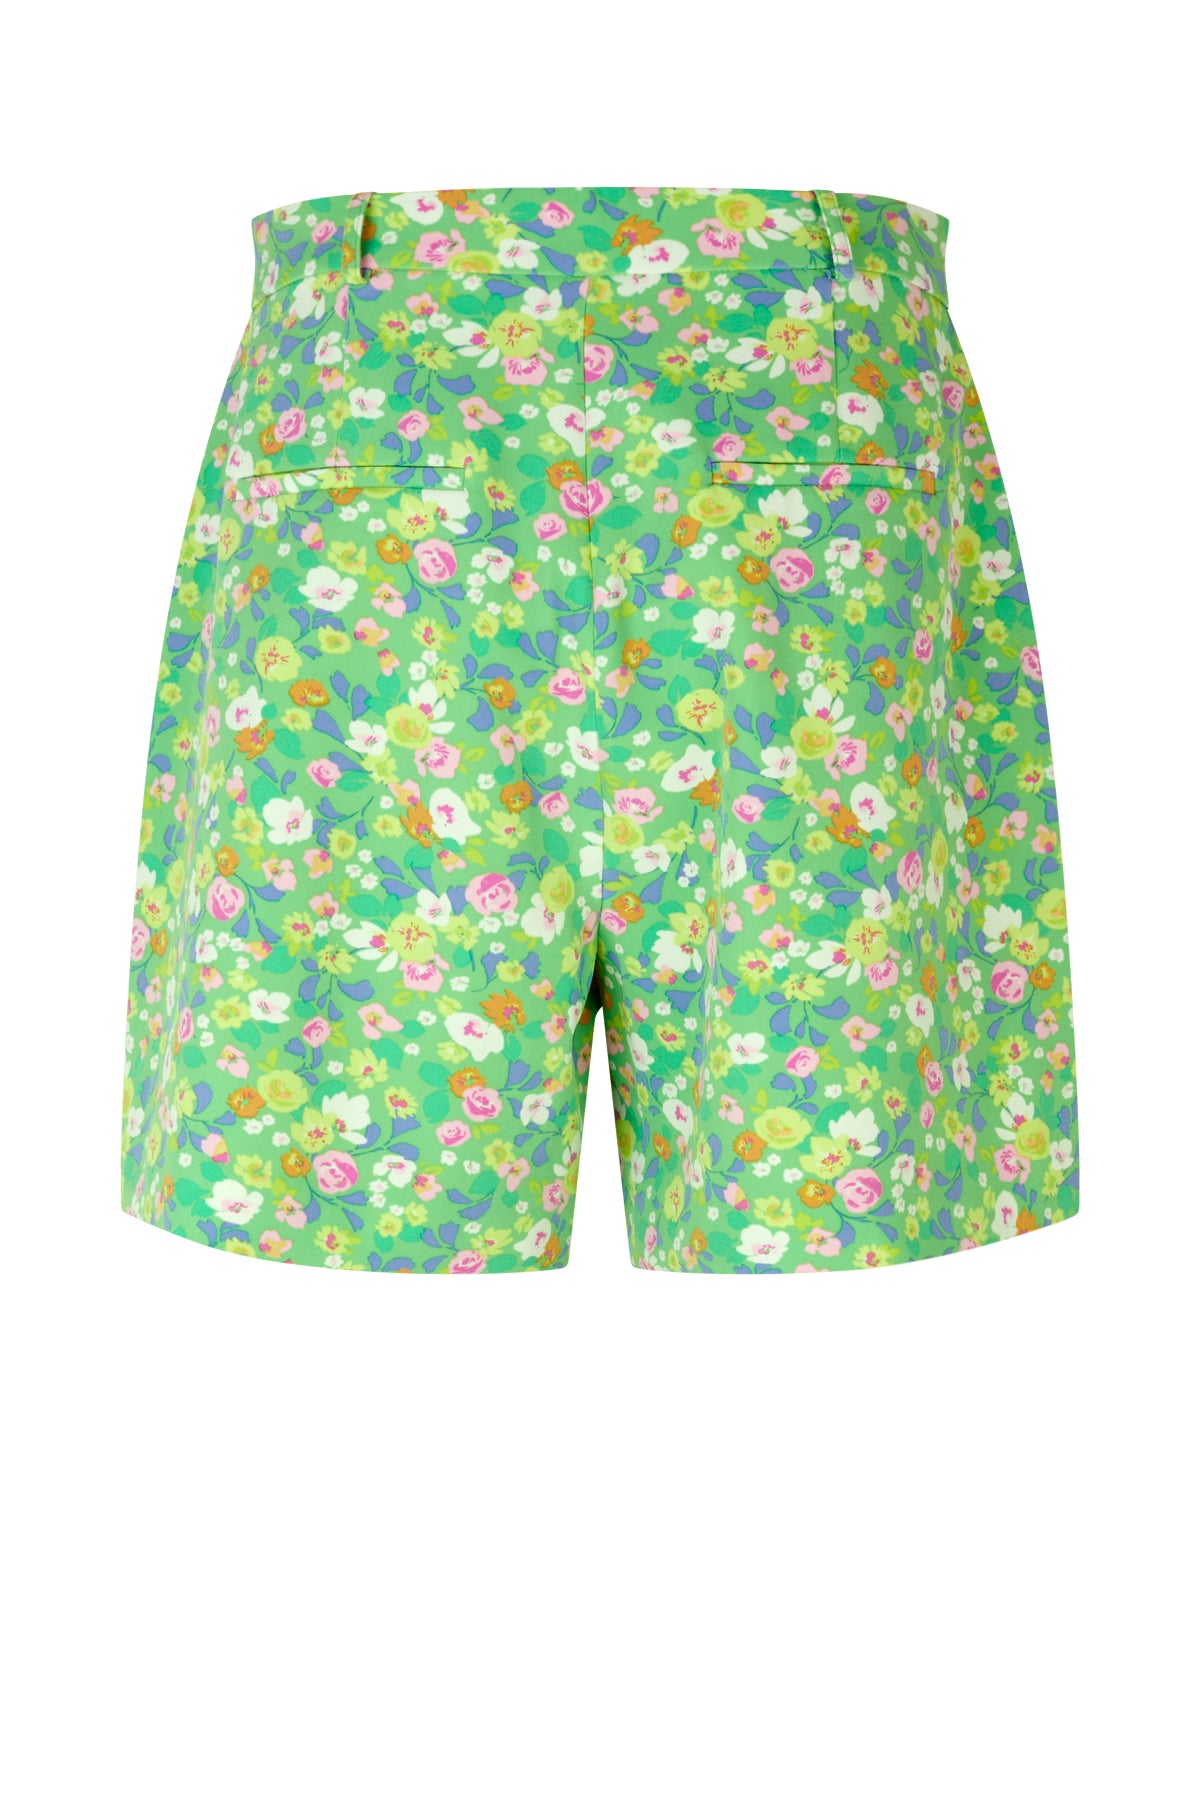 CRAS Samy Shorts Shorts Candy Floral